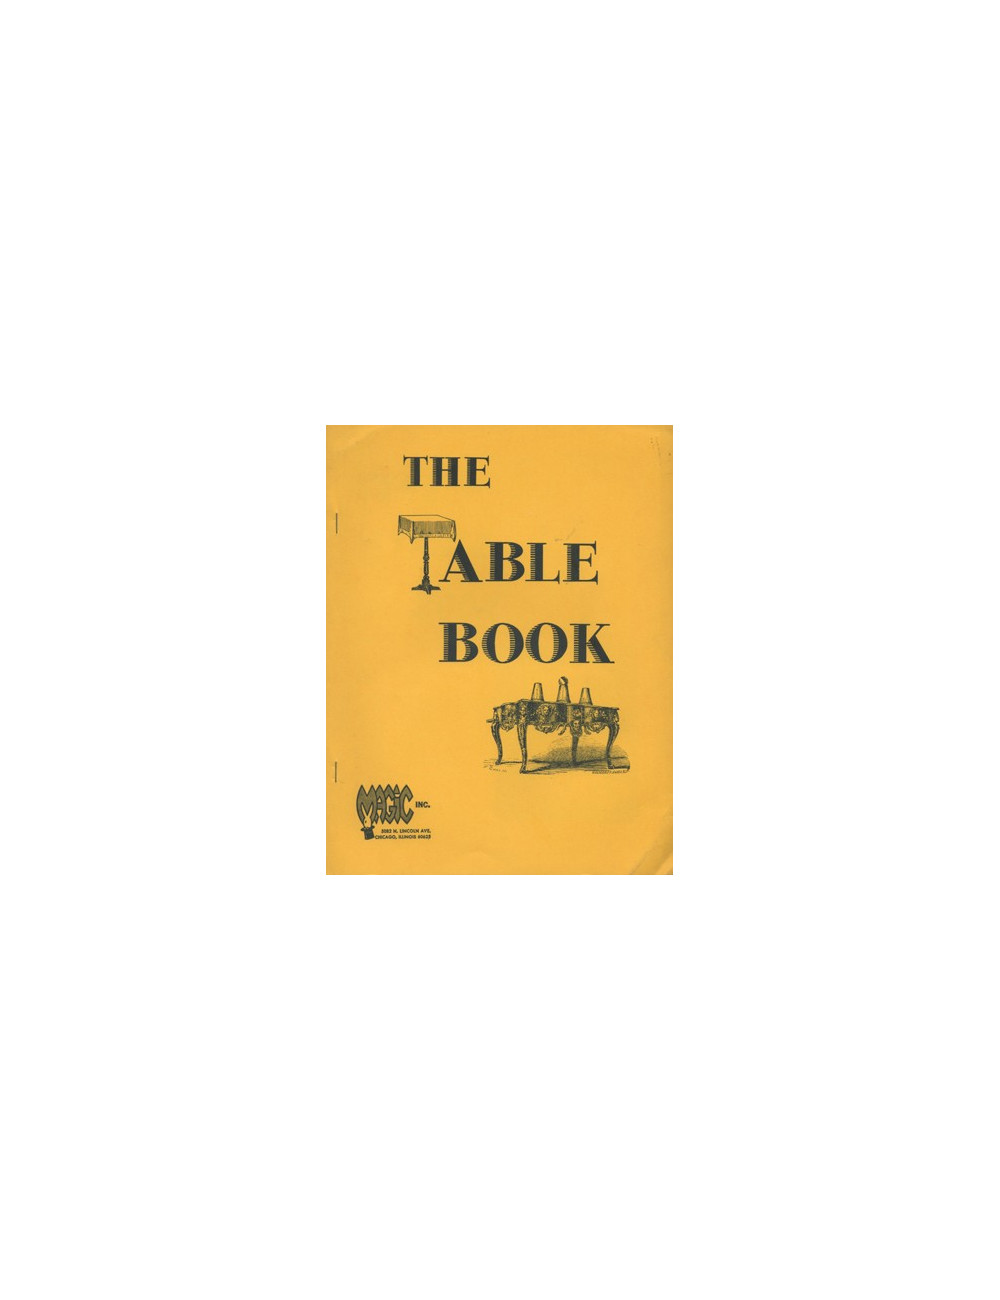 THE TABLE BOOK (GLOYE Eugene, MARSHALL Jay)